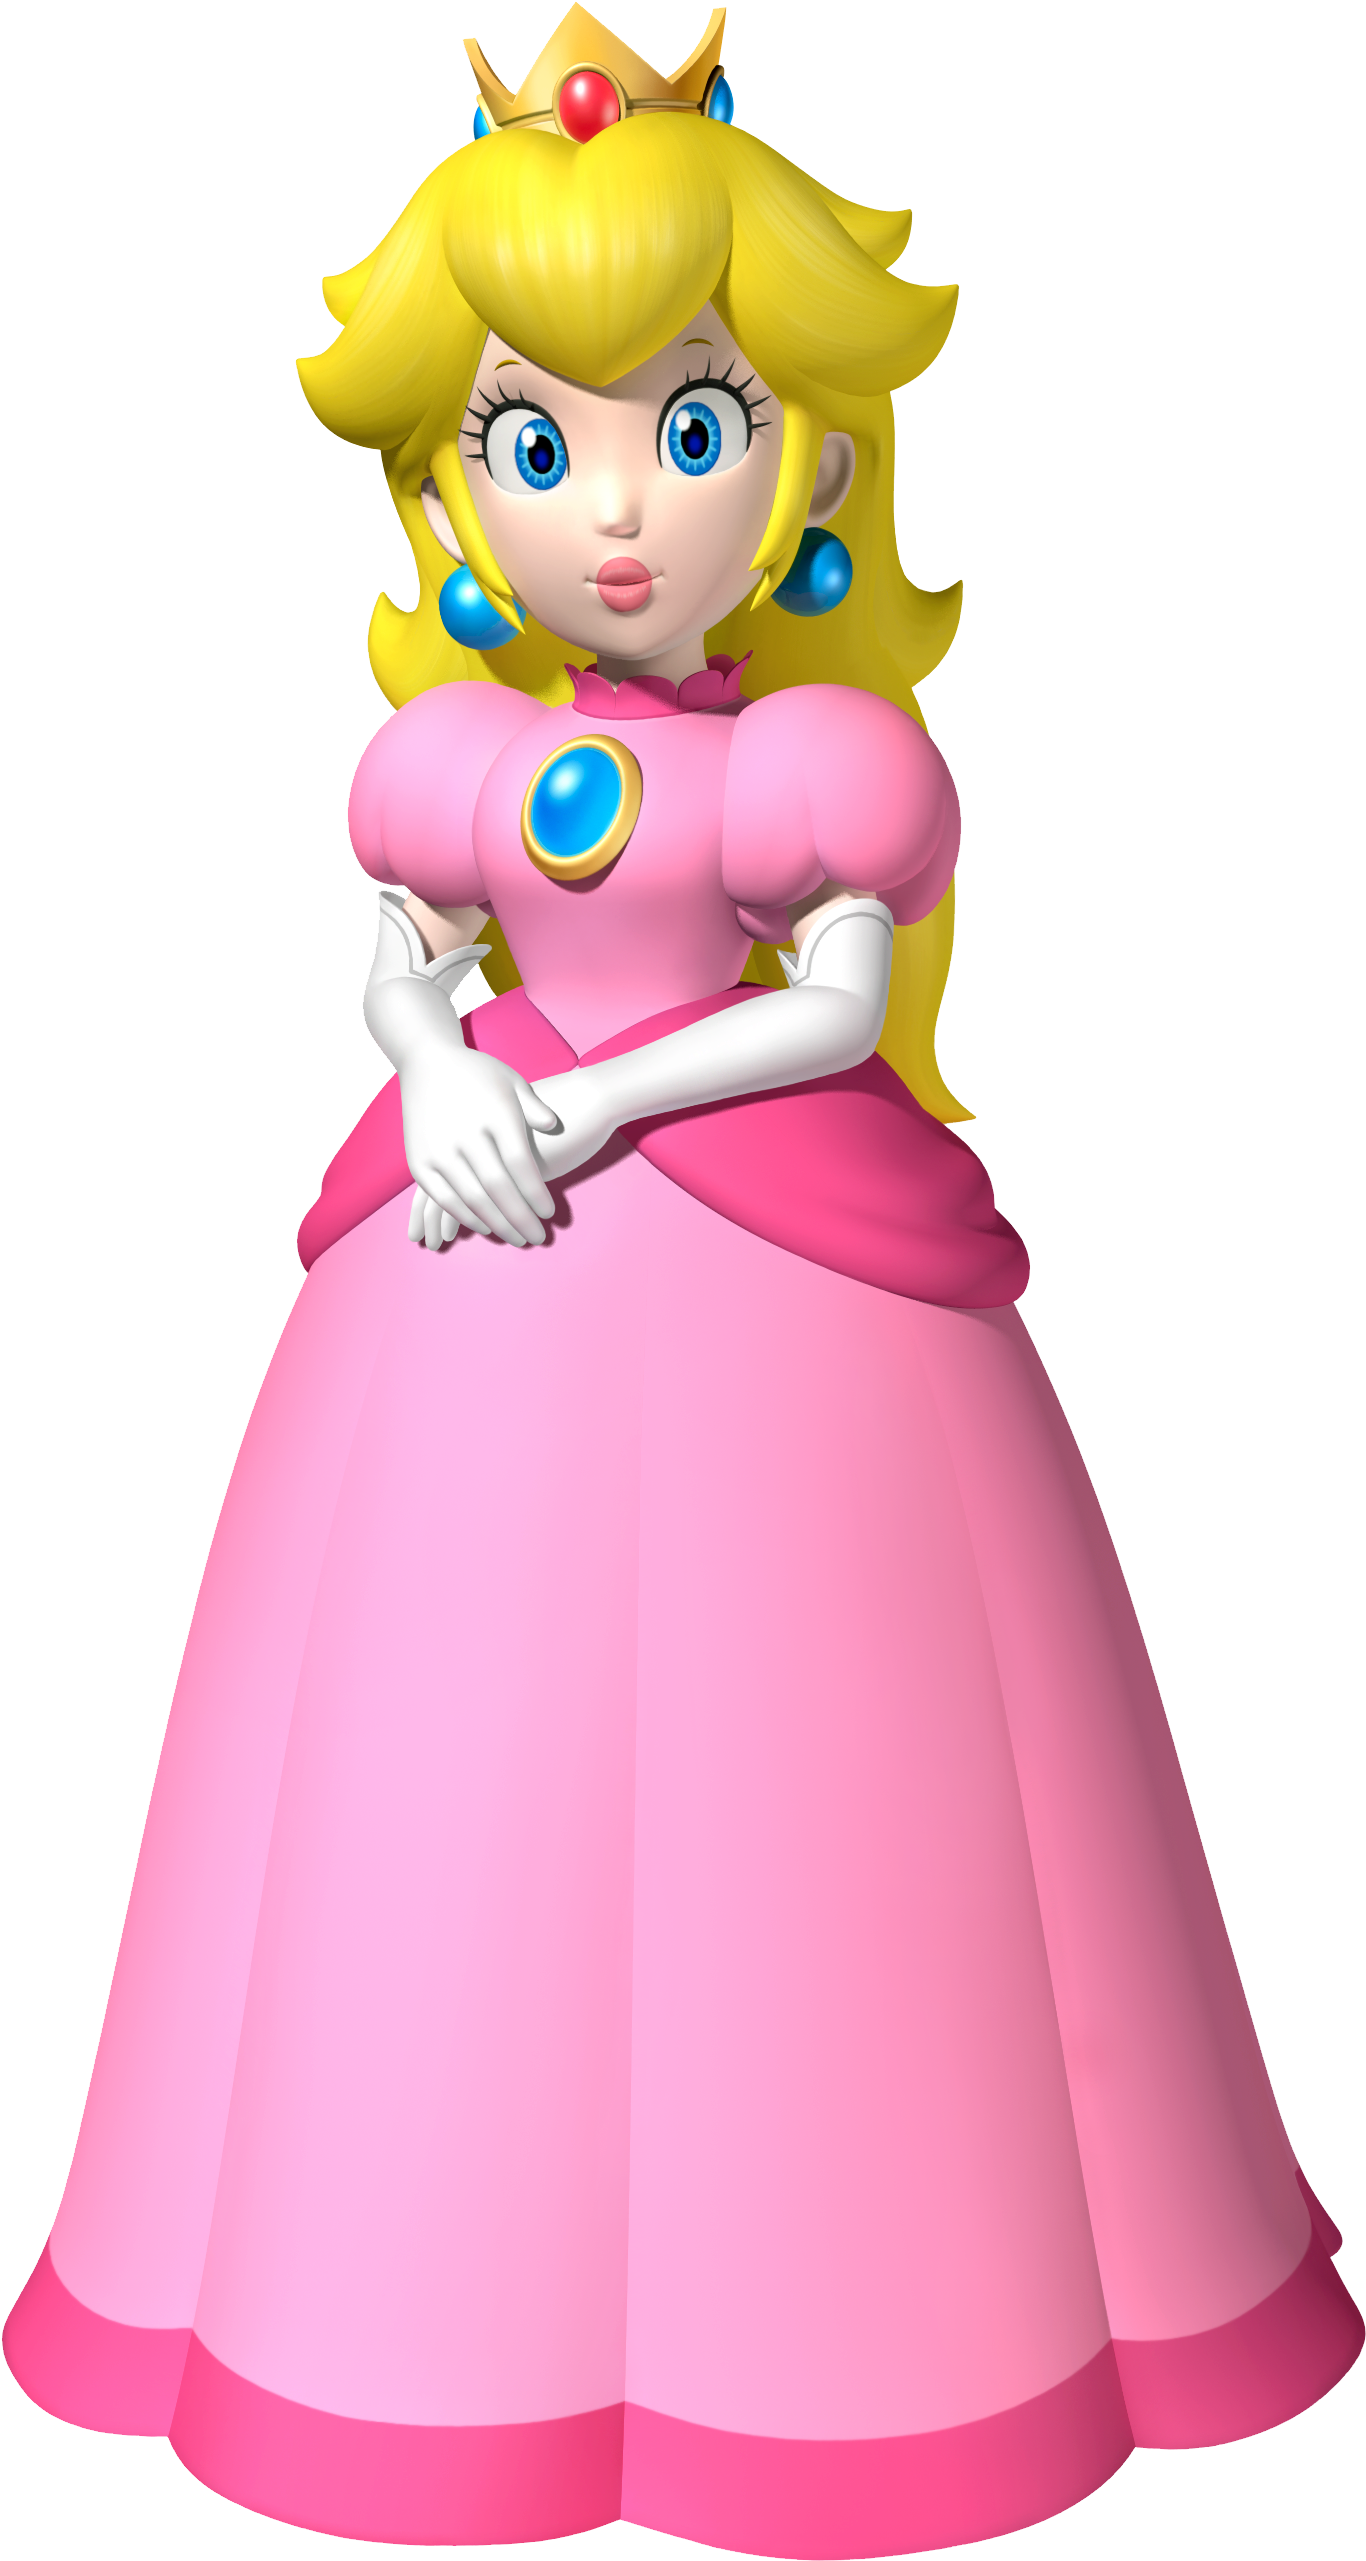 Princess Peach - Super Mario Princess Peach (1447x2635)